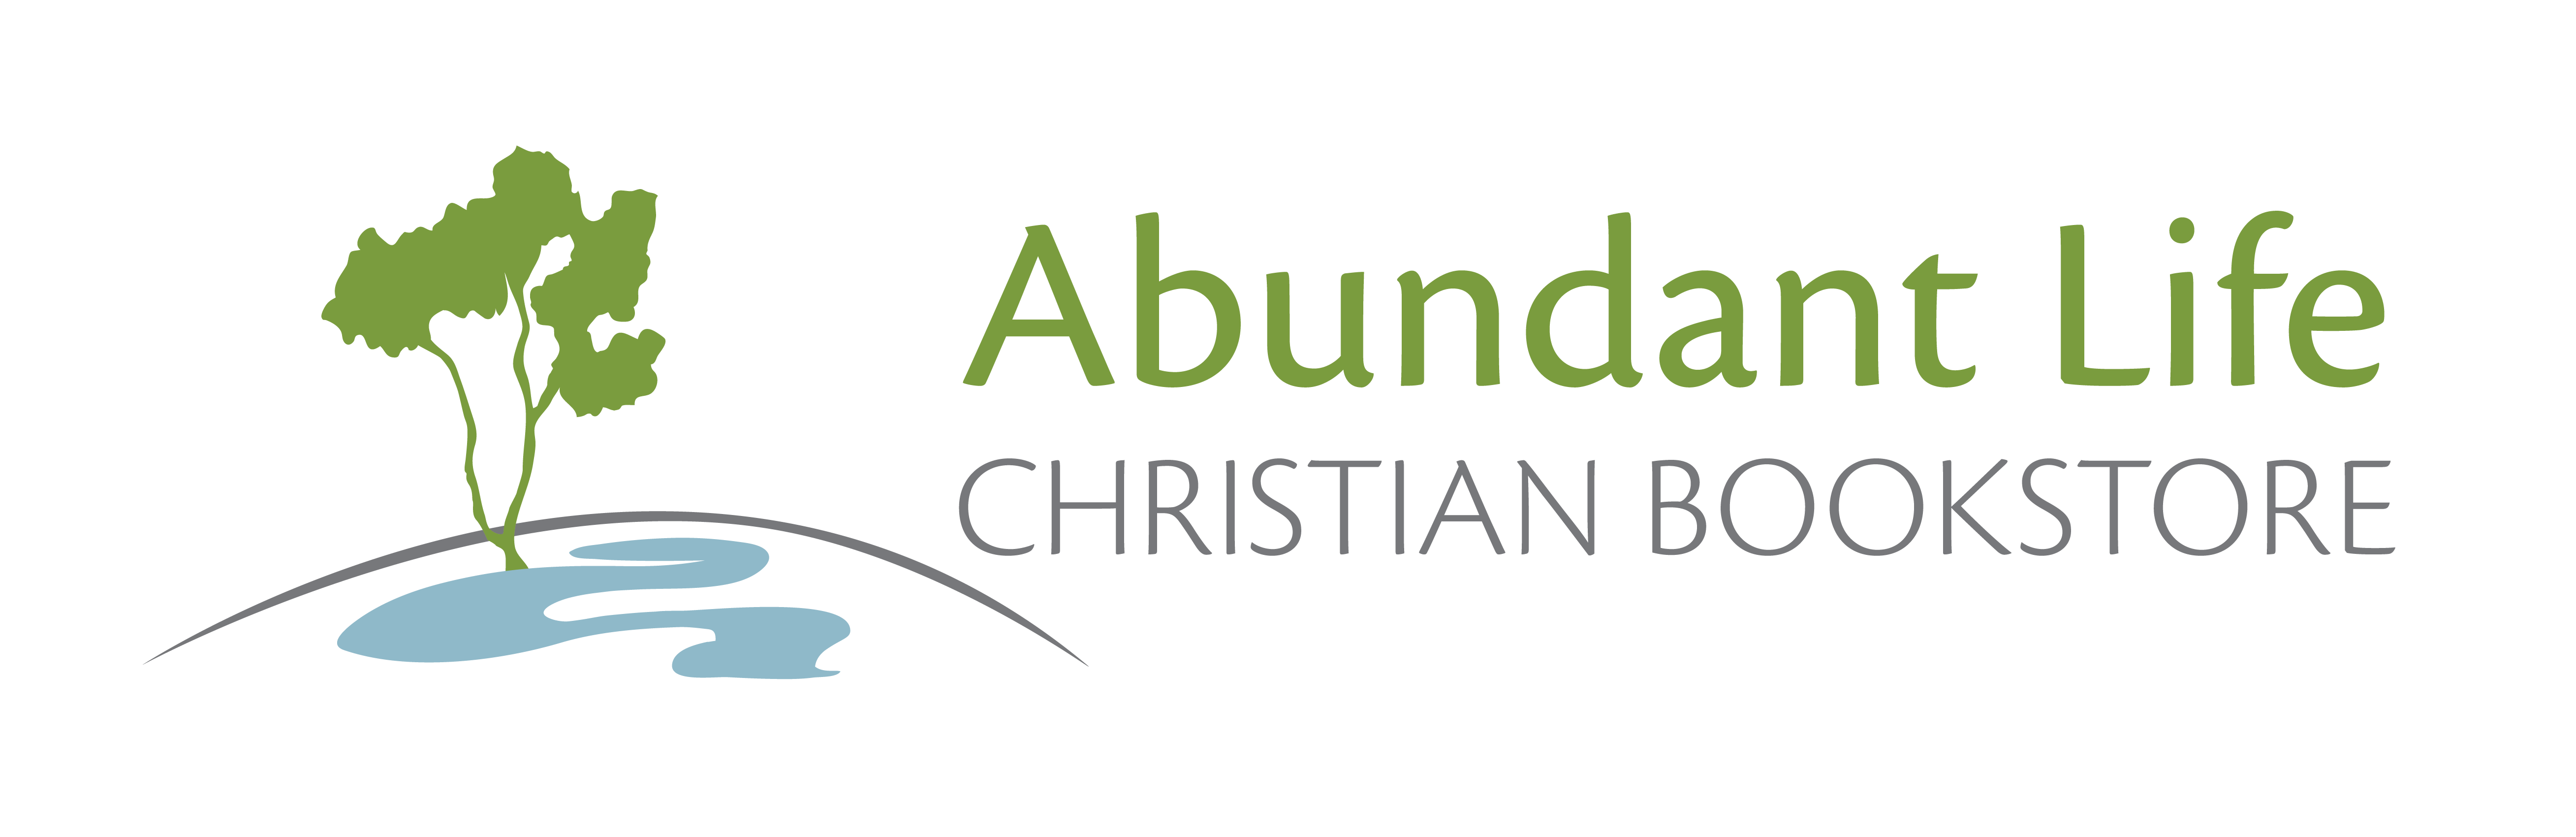 Abundant Life Christian Bookstore - A Ministry of Good Shepherd Baptist Church